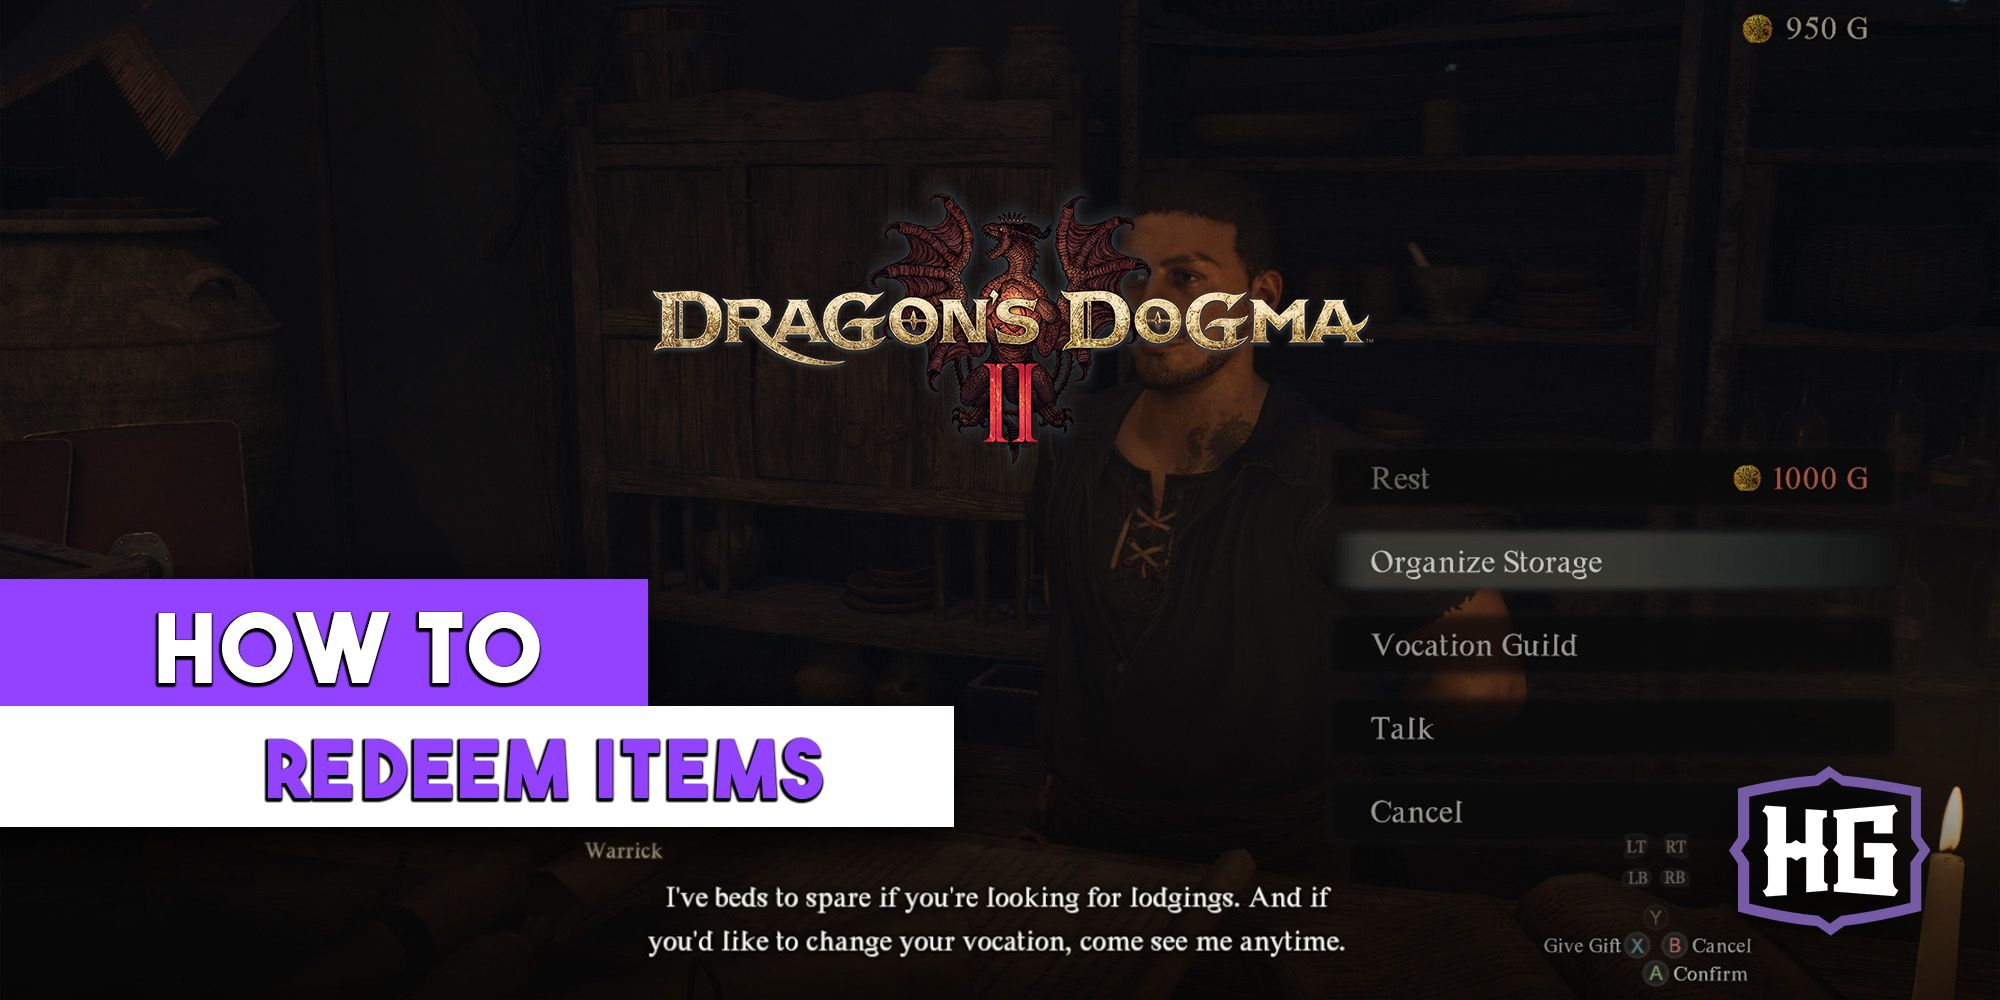 Buy Dragon's Dogma 2: Heartfelt Pendant - A Thoughtful Gift